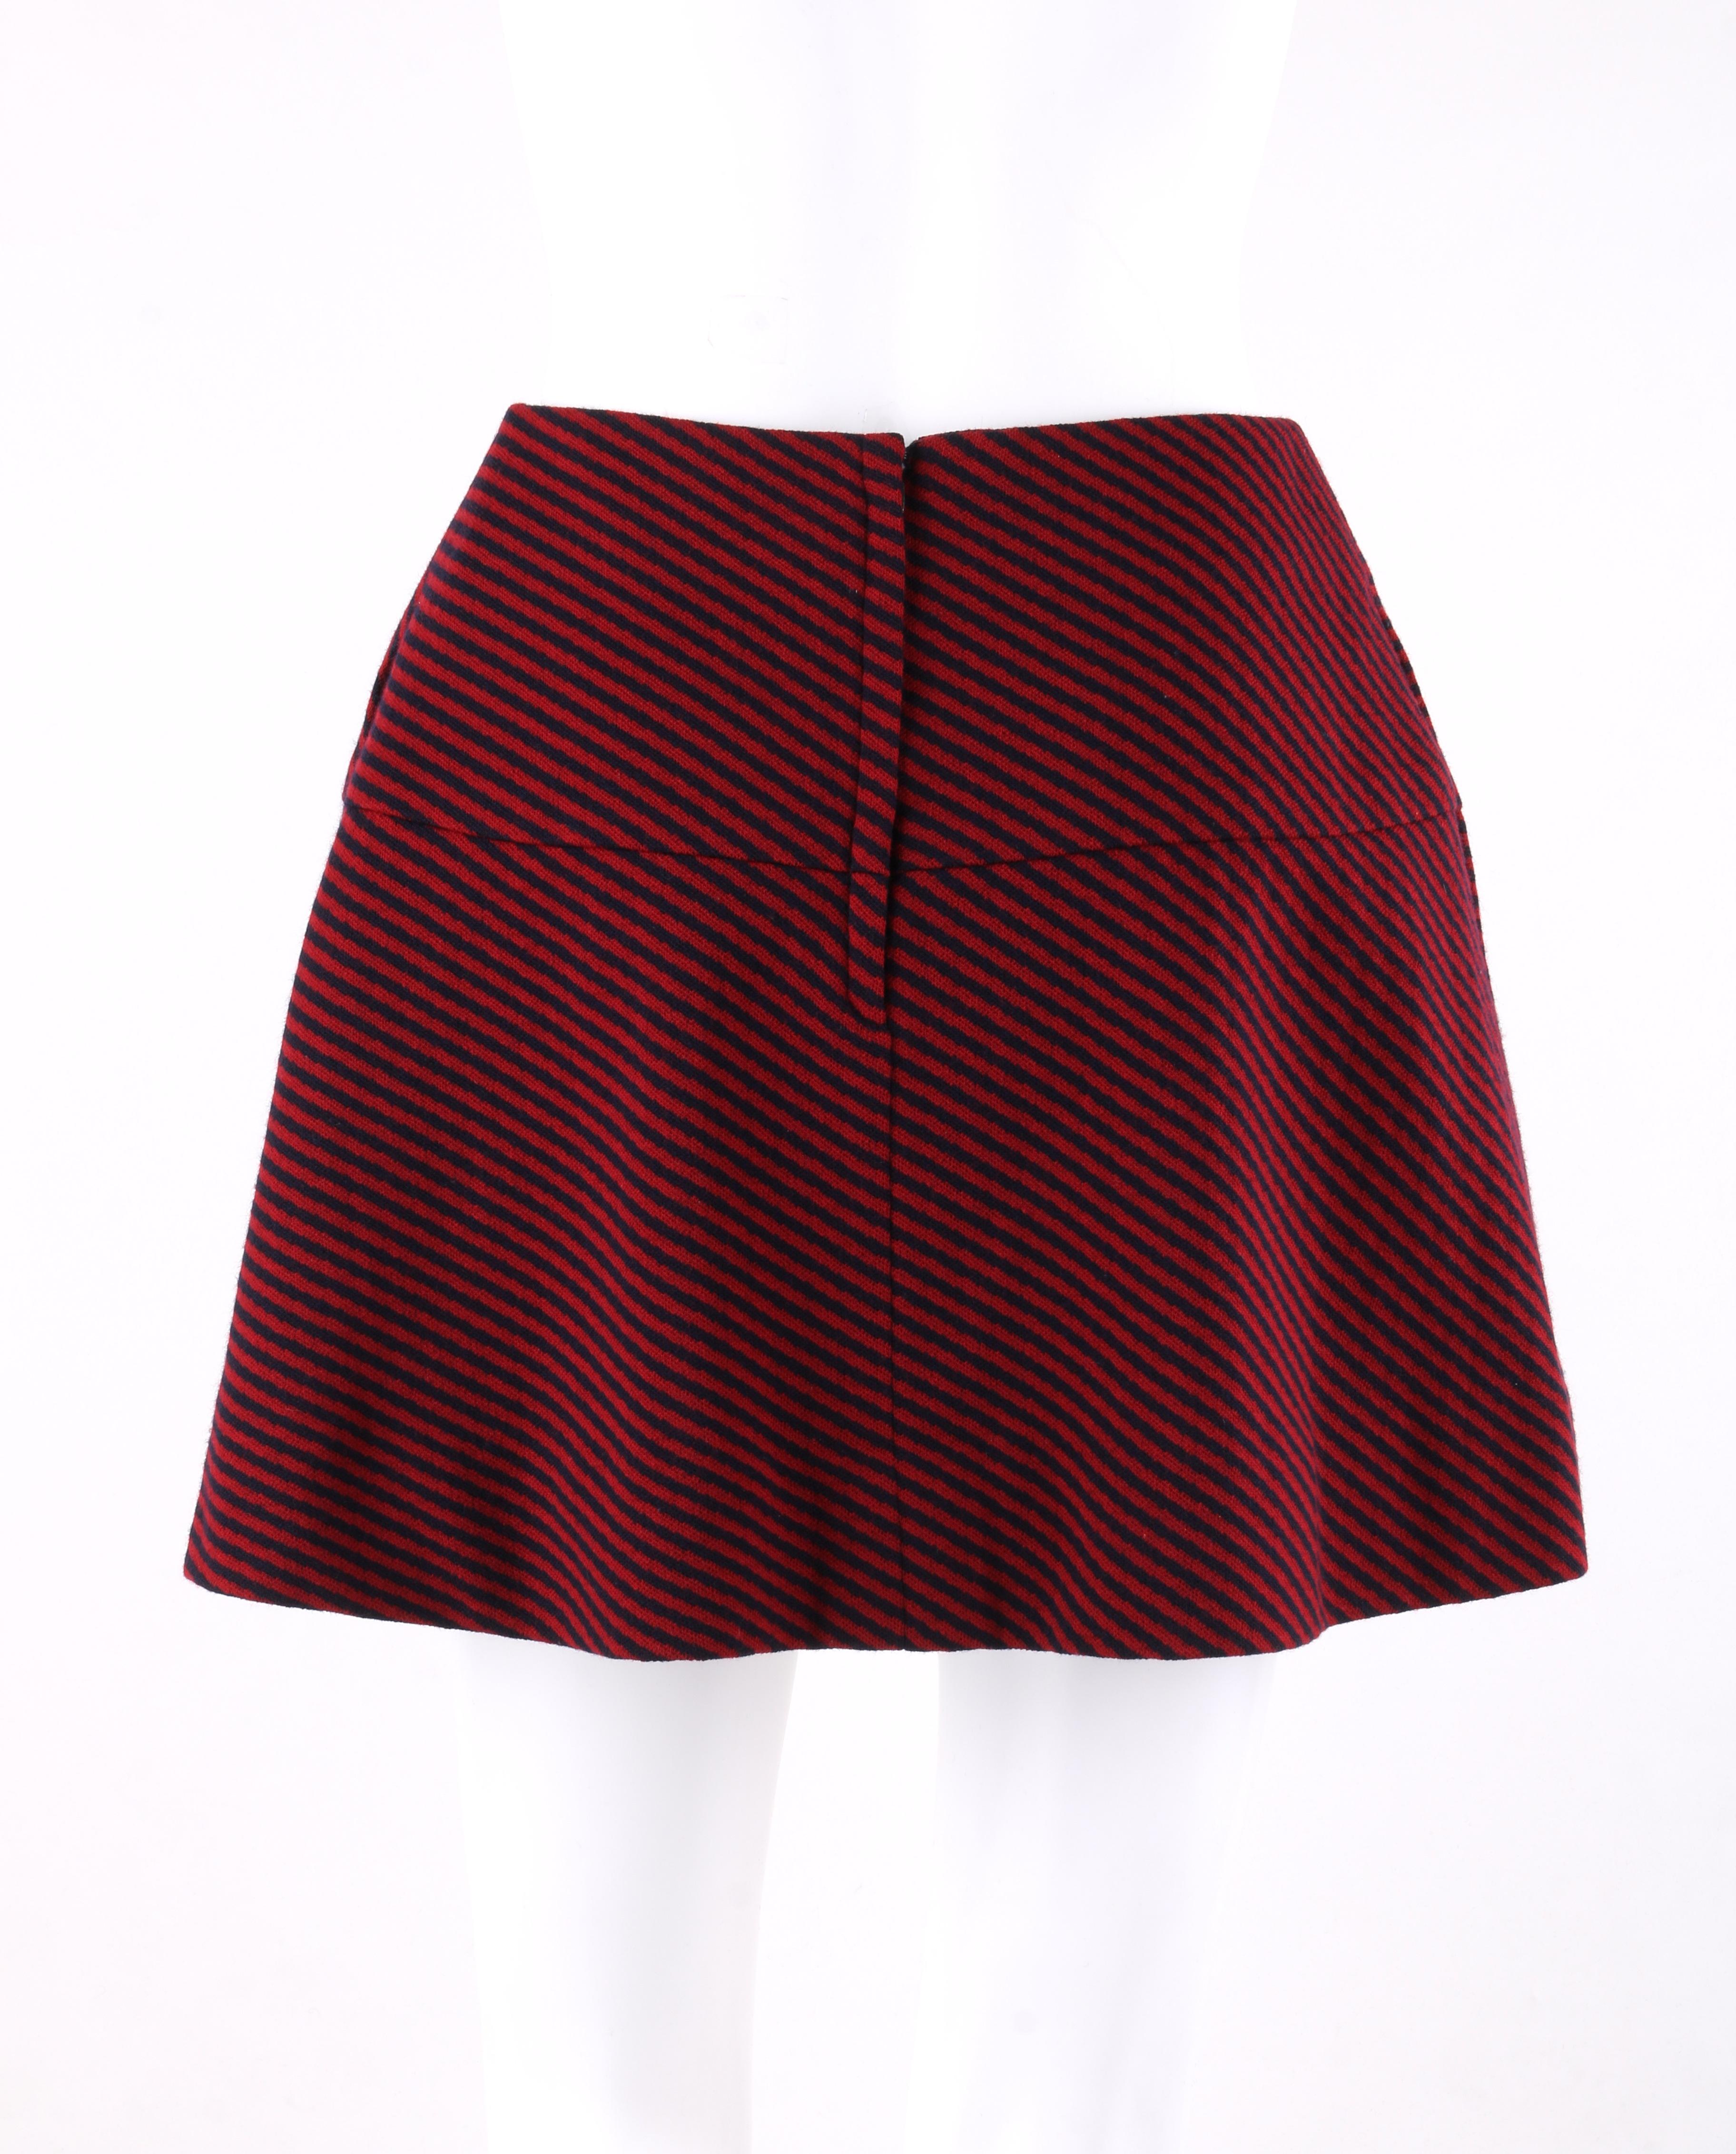 RUDI GERNREICH Harmon Knitwear c.1960's 2pc Raised Knit Stripe Sweater Skirt Set For Sale 1